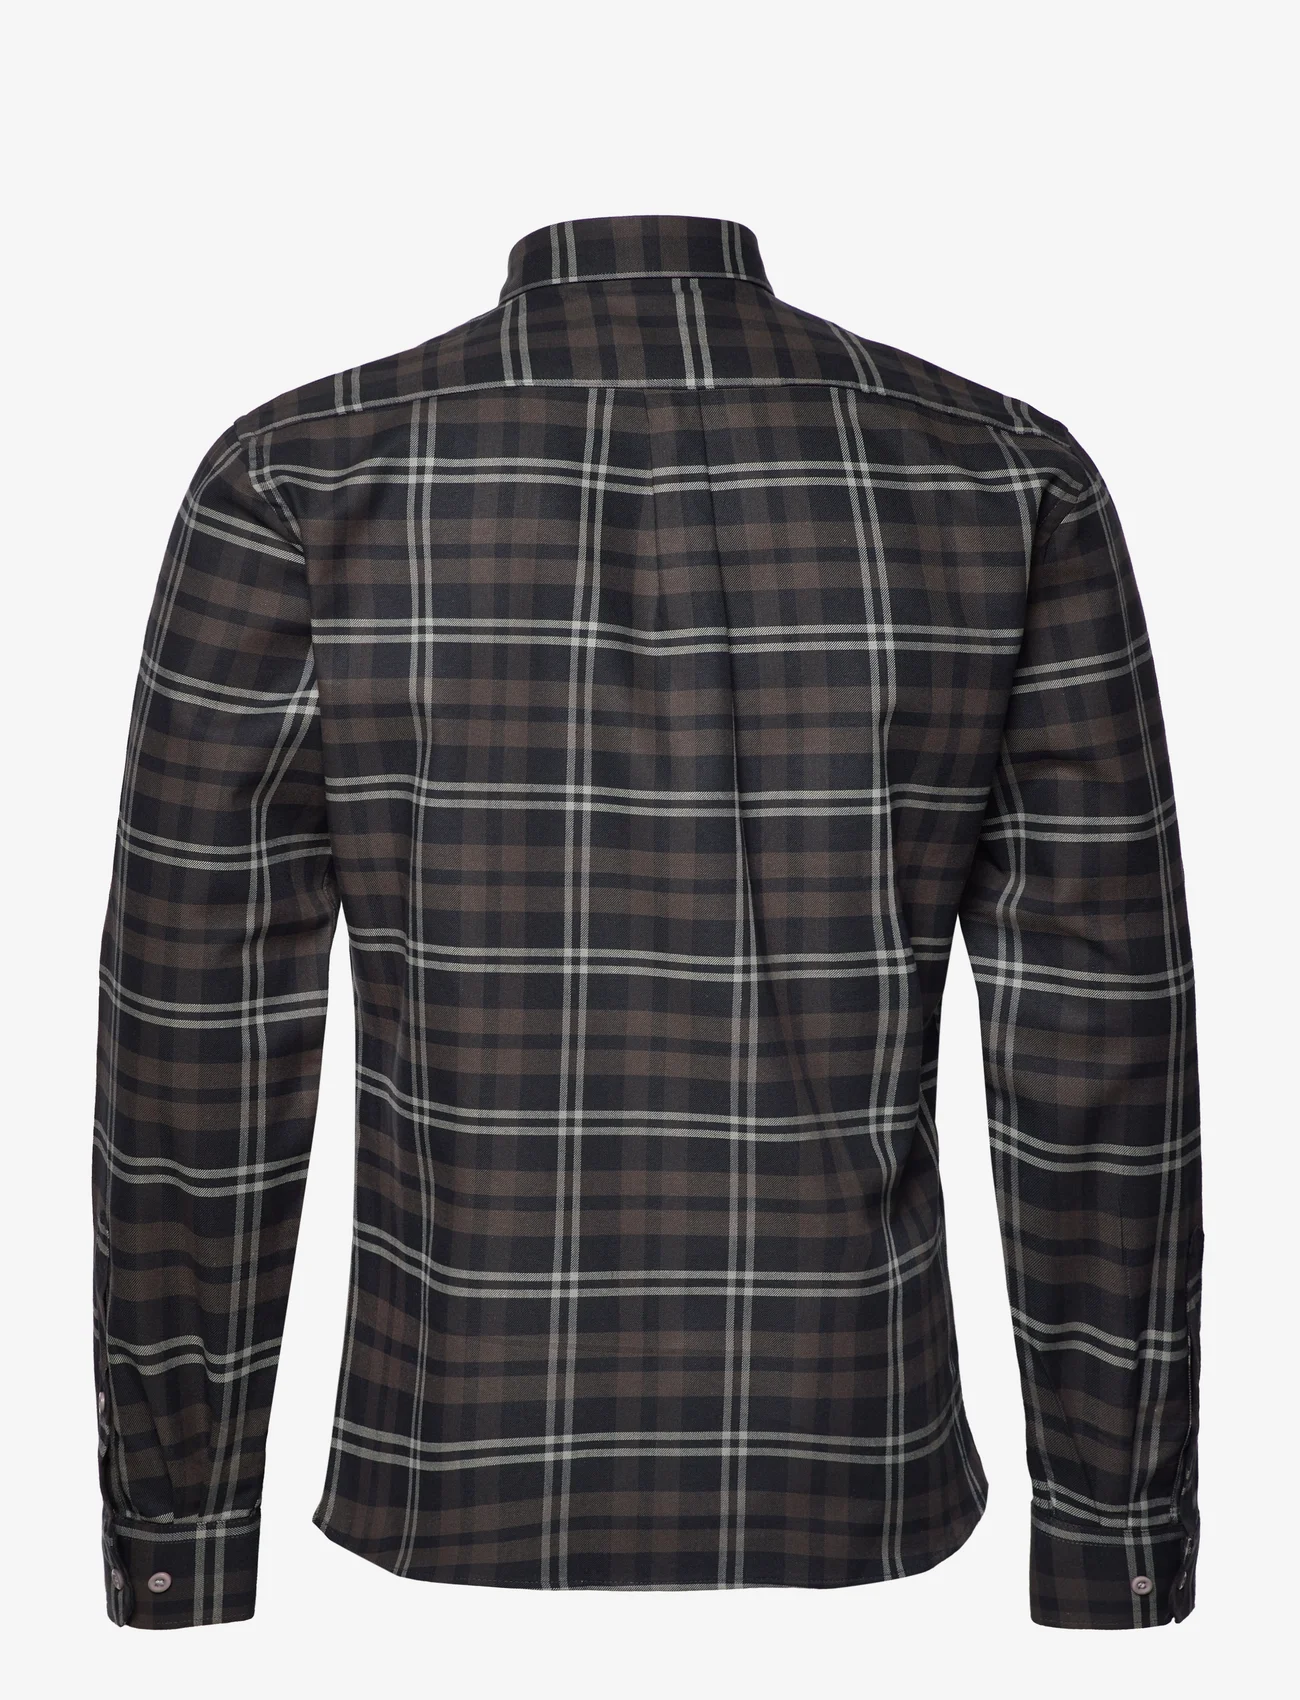 Lindbergh - Checked shirt L/S - rutiga skjortor - black - 1